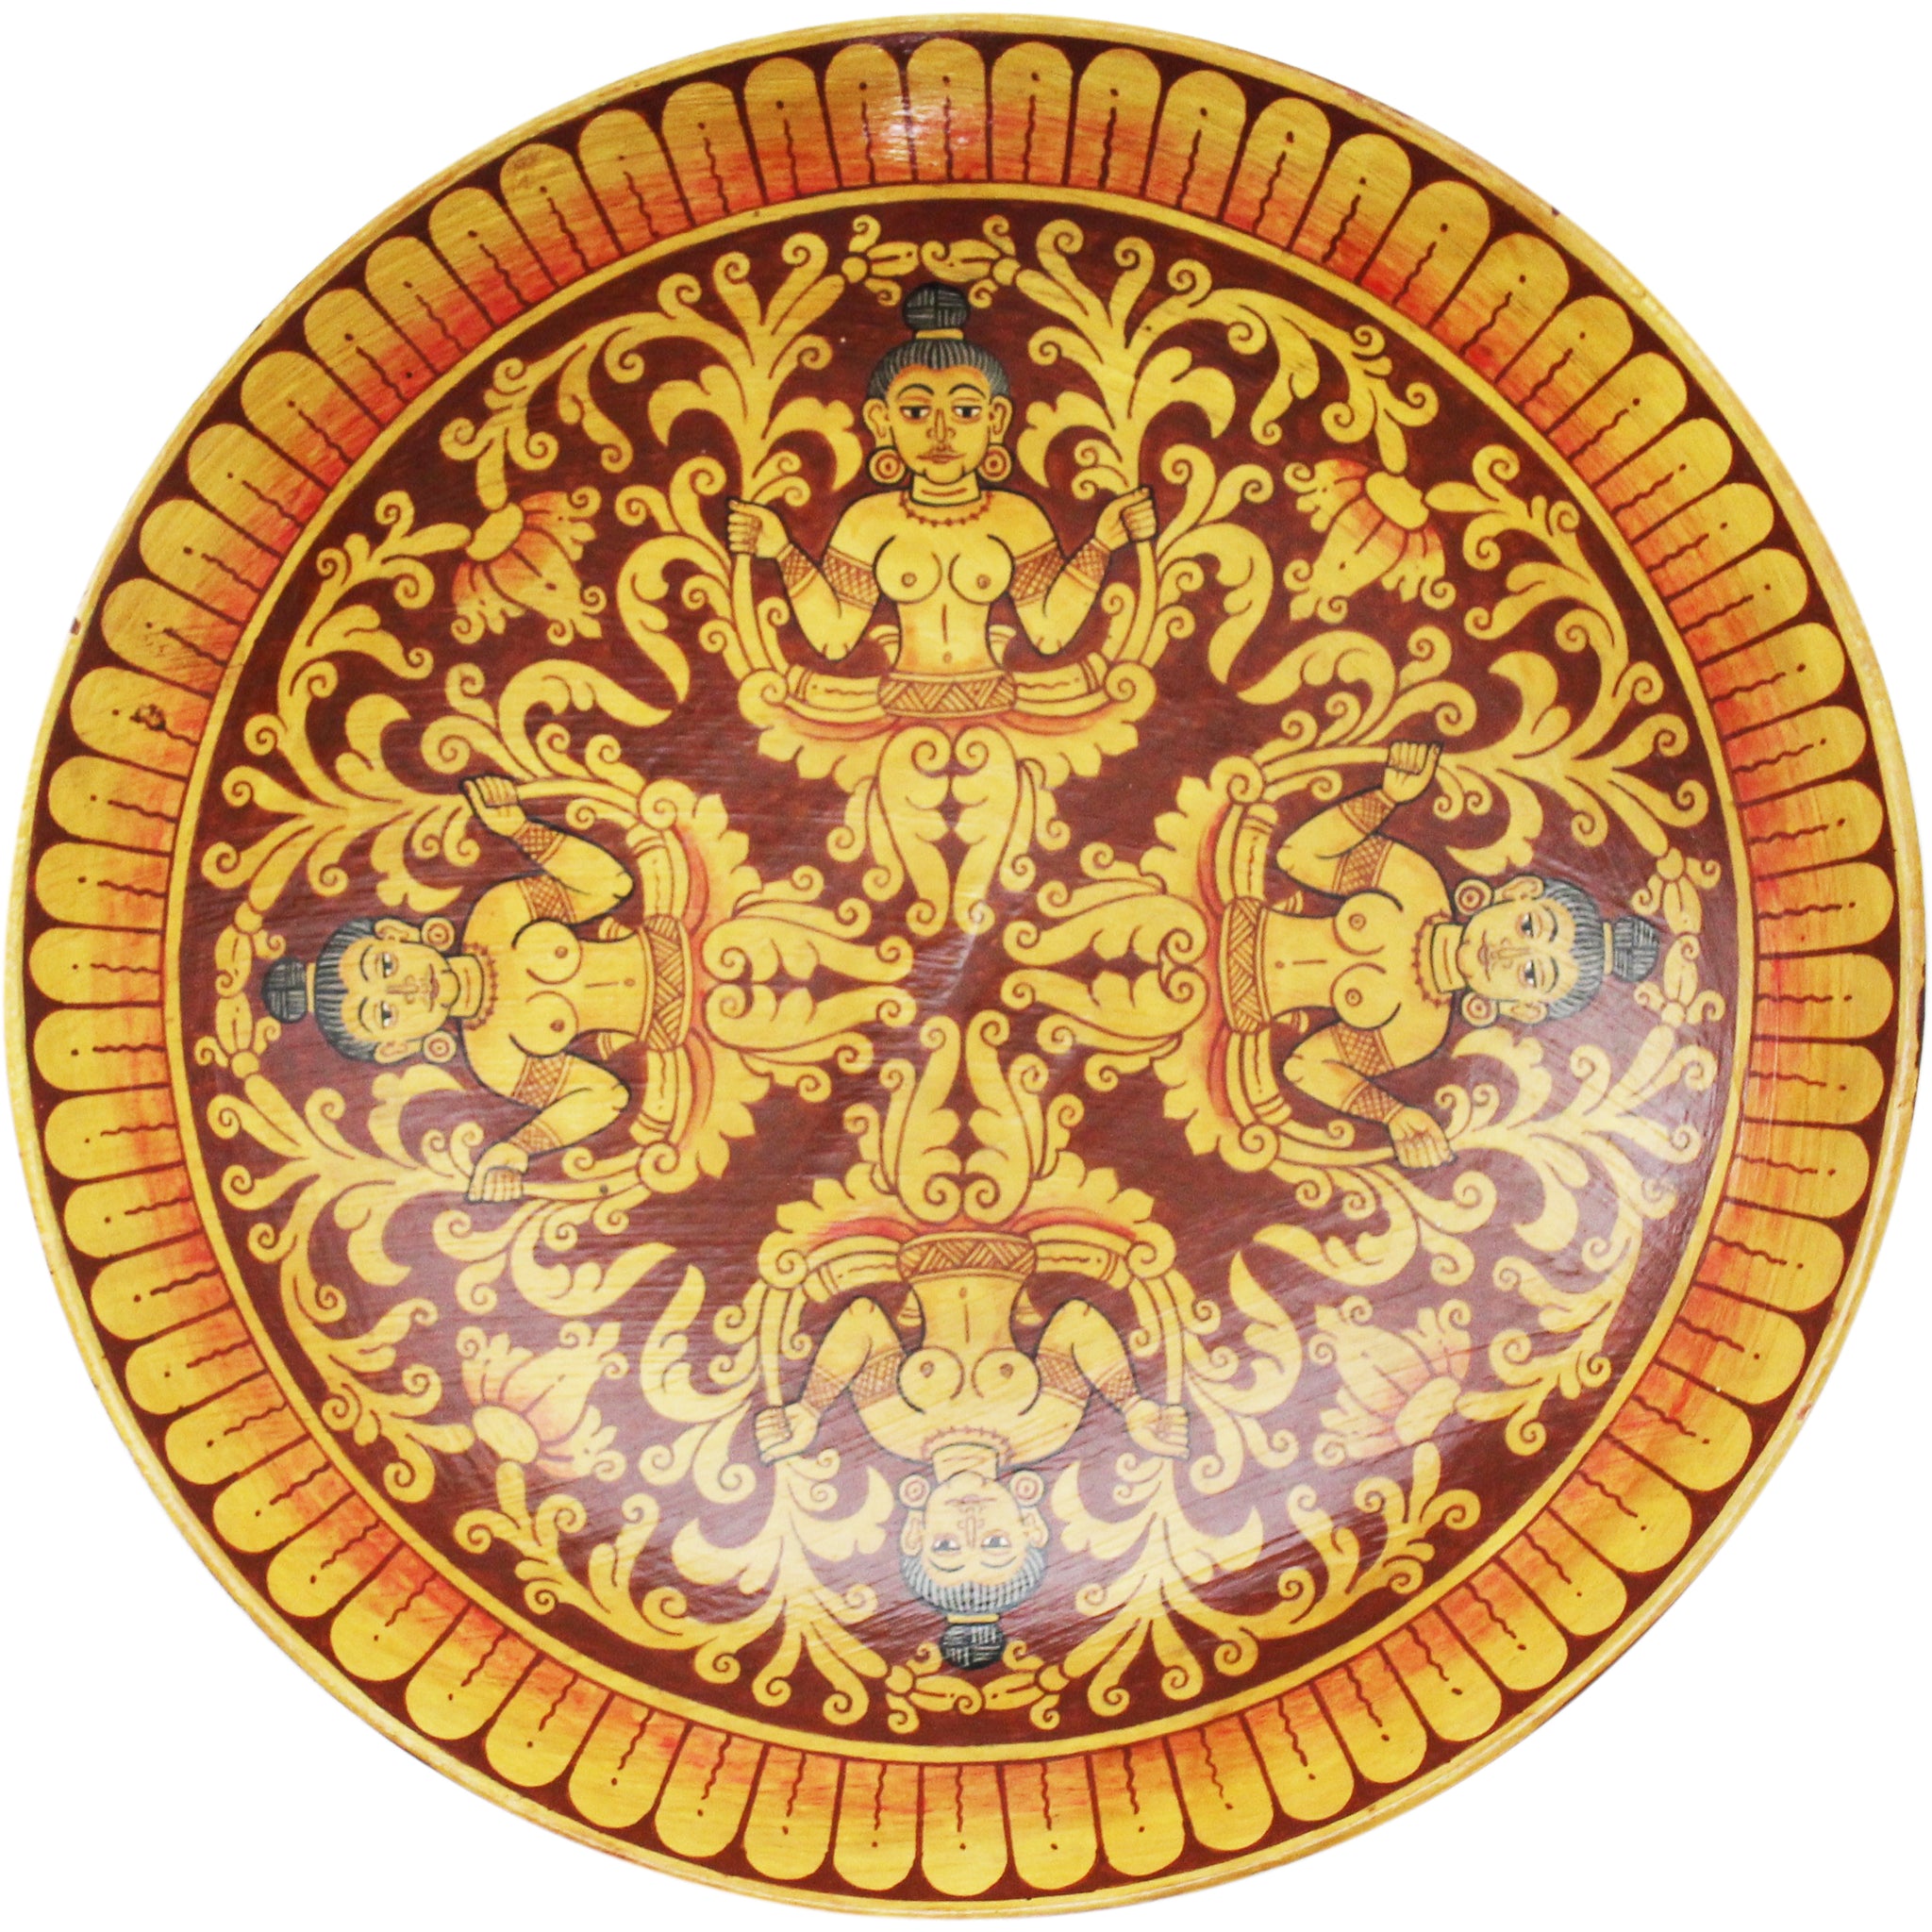 Painted wooden plate - large; Narilatha mandala